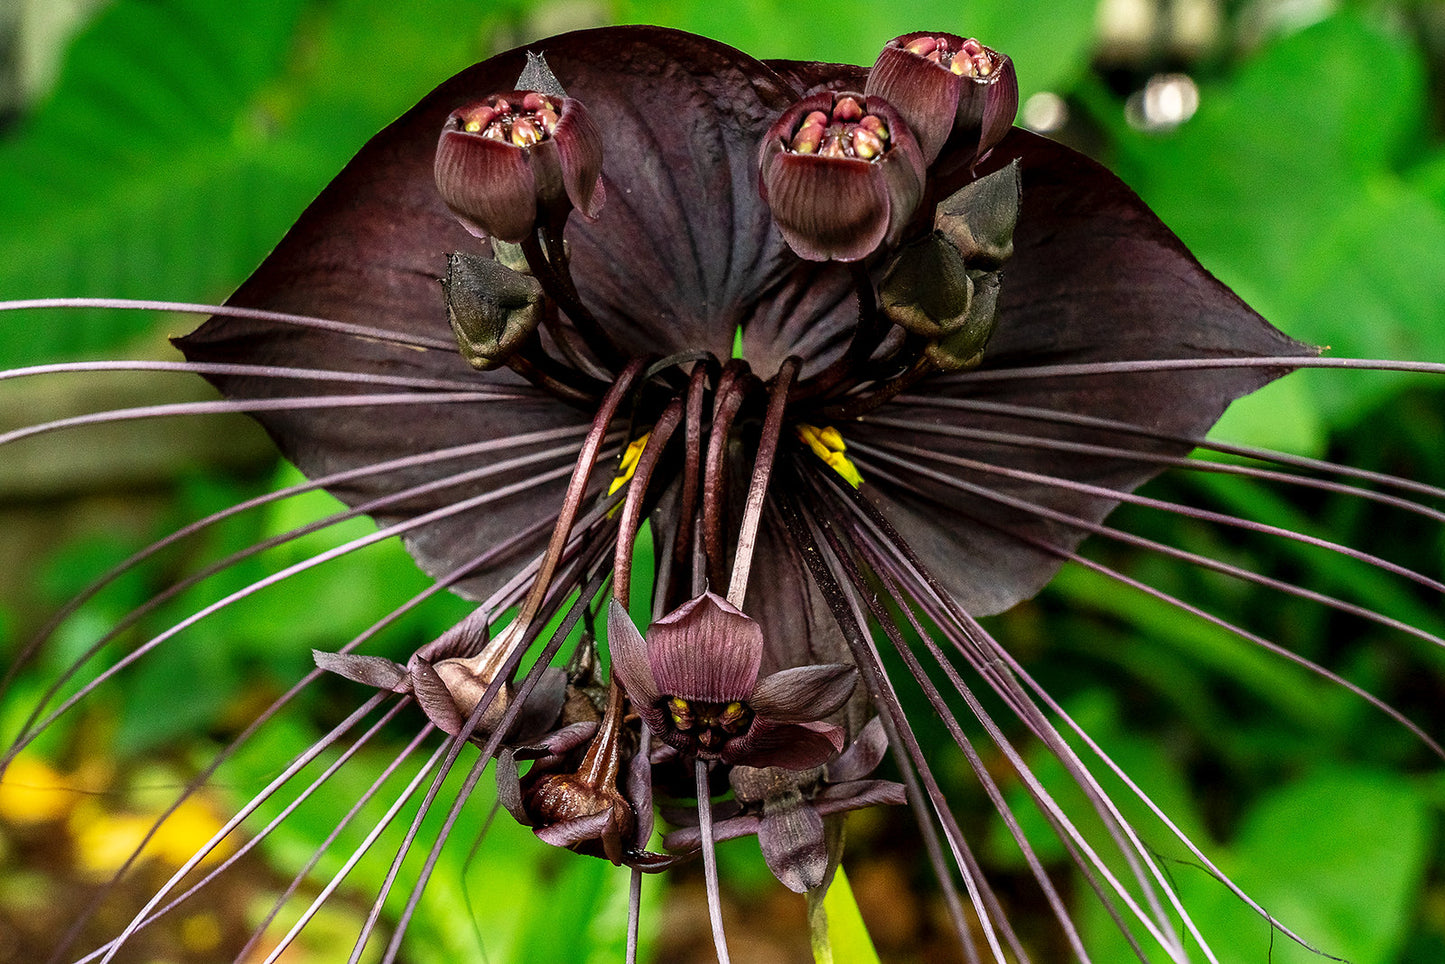 Black Bat Flower Tacca chantrieri 20 Seeds  USA Company